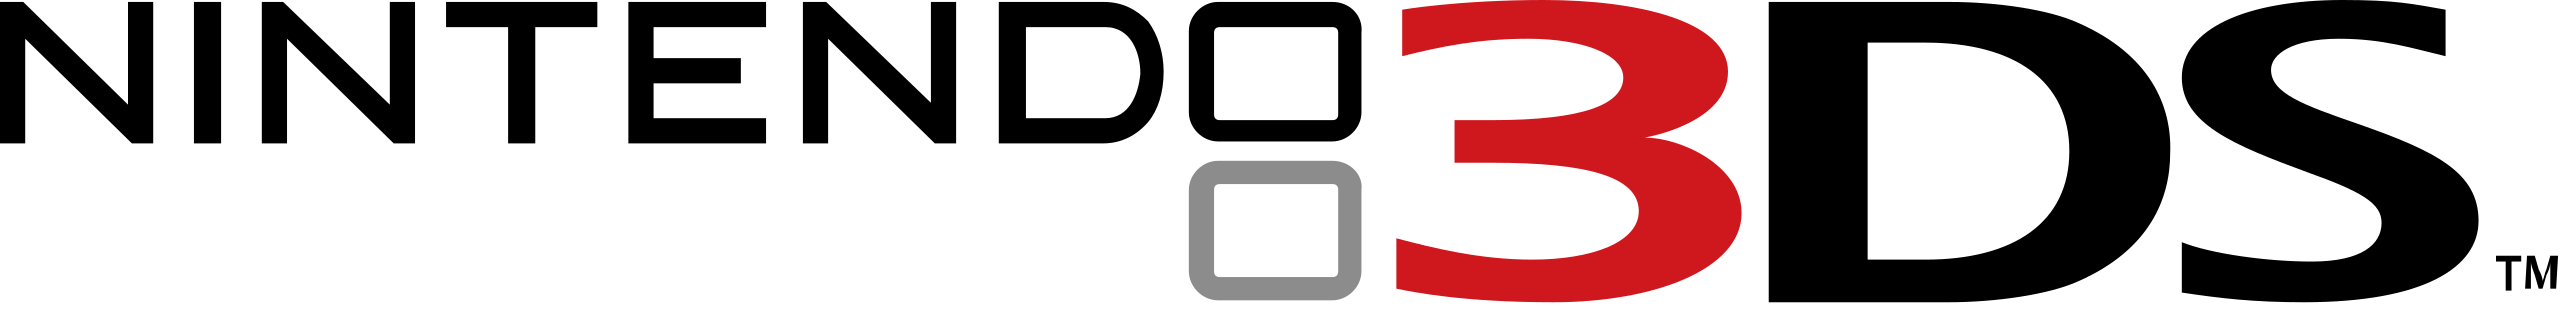 Nintendo 3ds logo.png